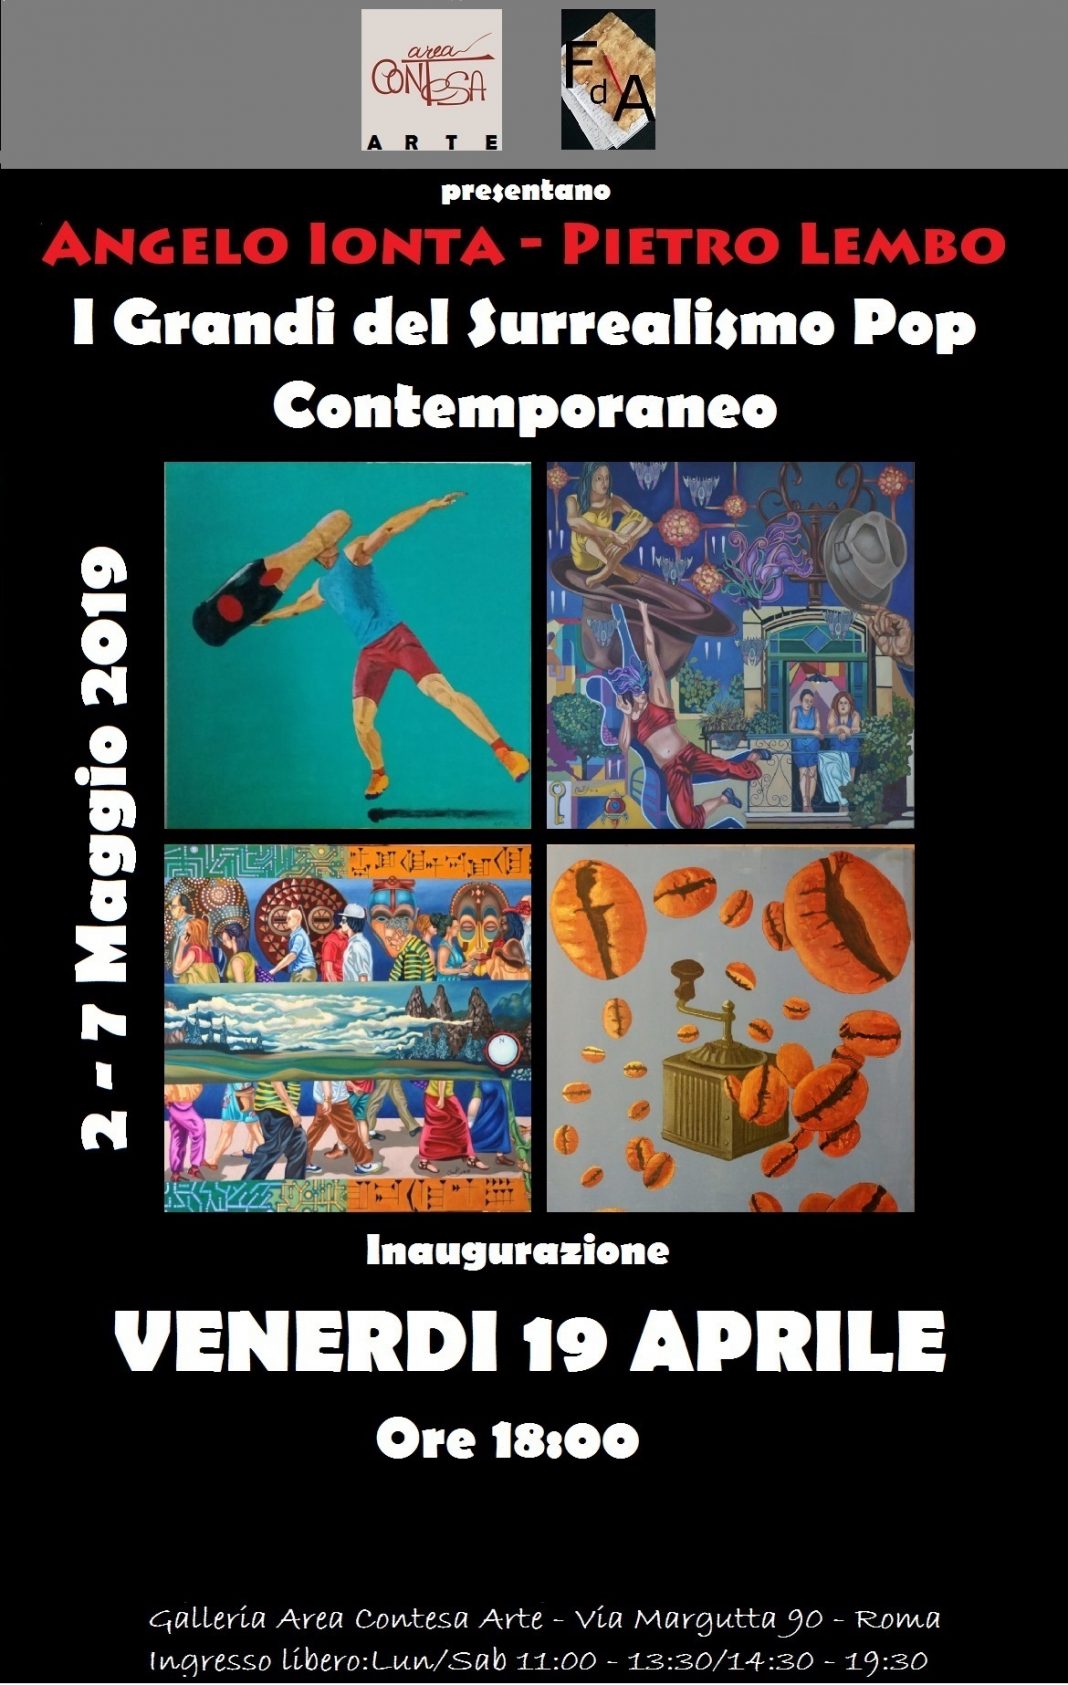 Pietro Lembo / Angelo Ionta – I grandi del surrealismo pop contemporaneohttps://www.exibart.com/repository/media/eventi/2019/05/pietro-lembo-angelo-ionta-8211-i-grandi-del-surrealismo-pop-contemporaneo-1068x1685.jpg